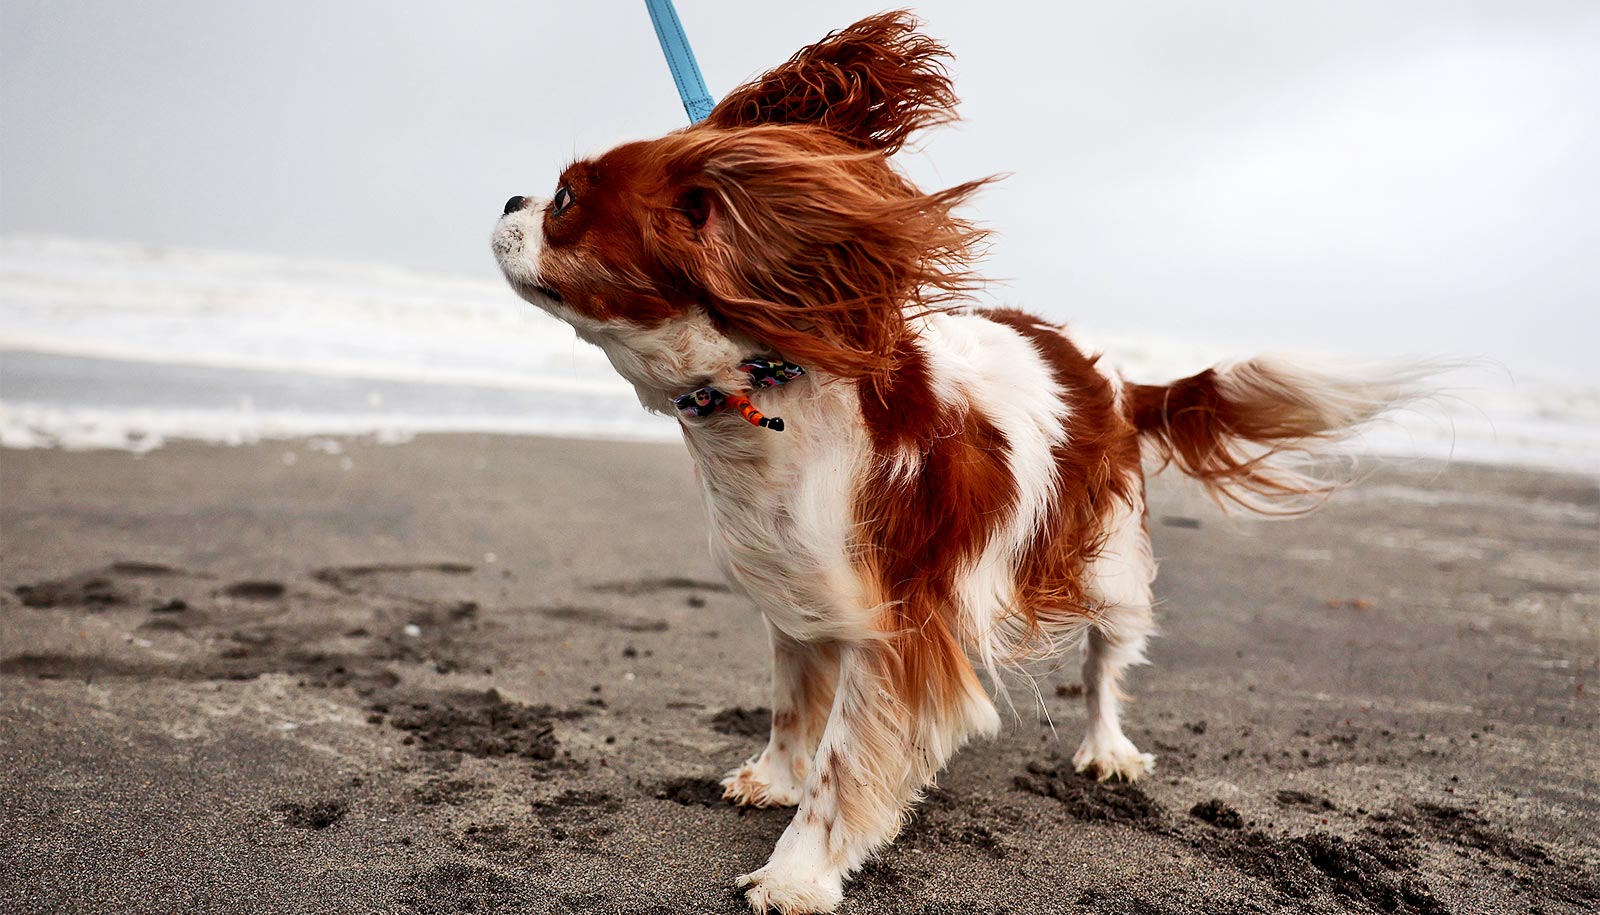 A dog's fur blows in the wind as it walks on a beach on a leash.